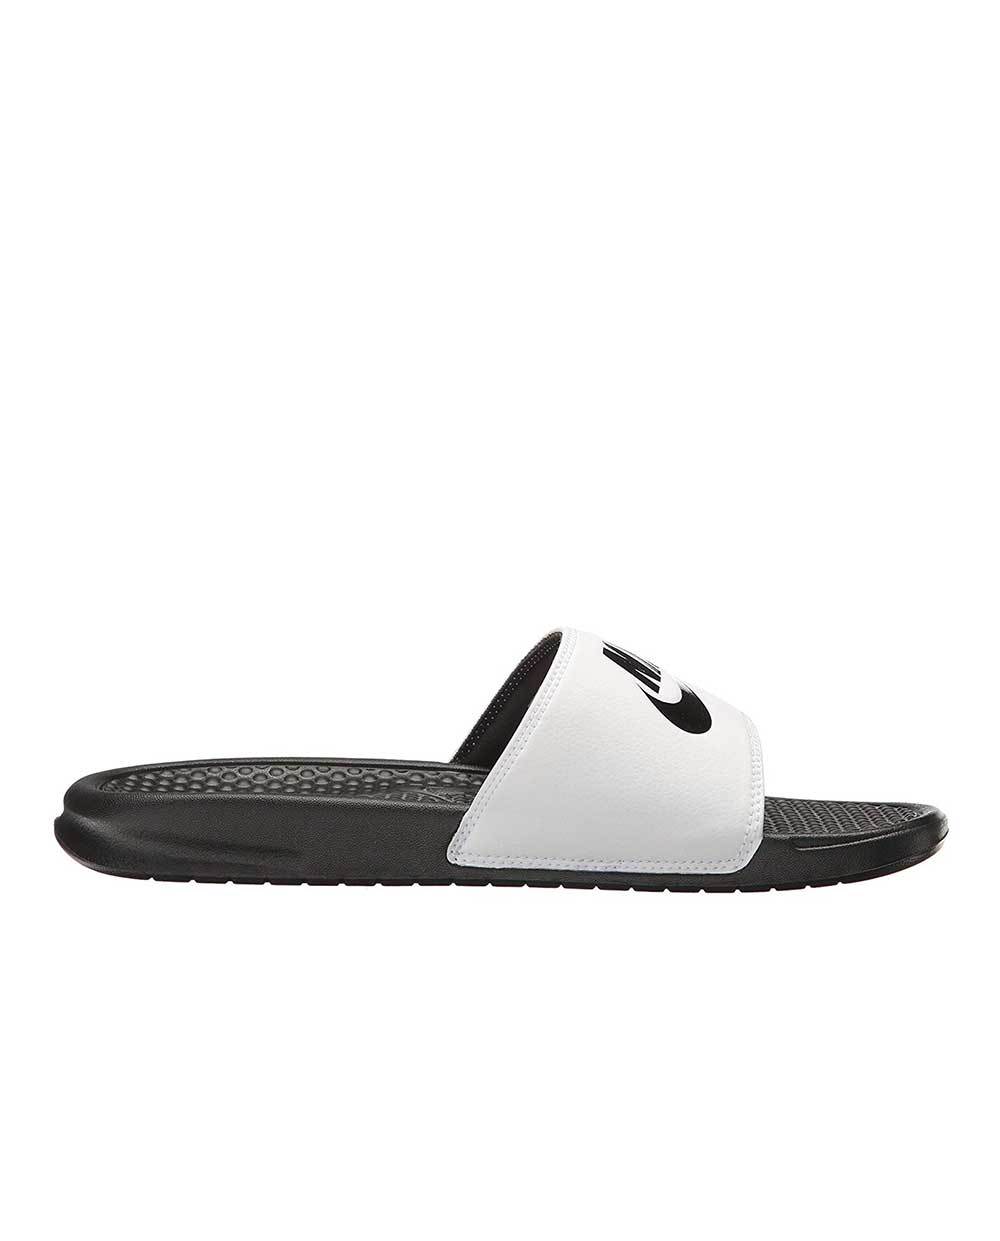 Nike Benassi White and Black Flip-Flops